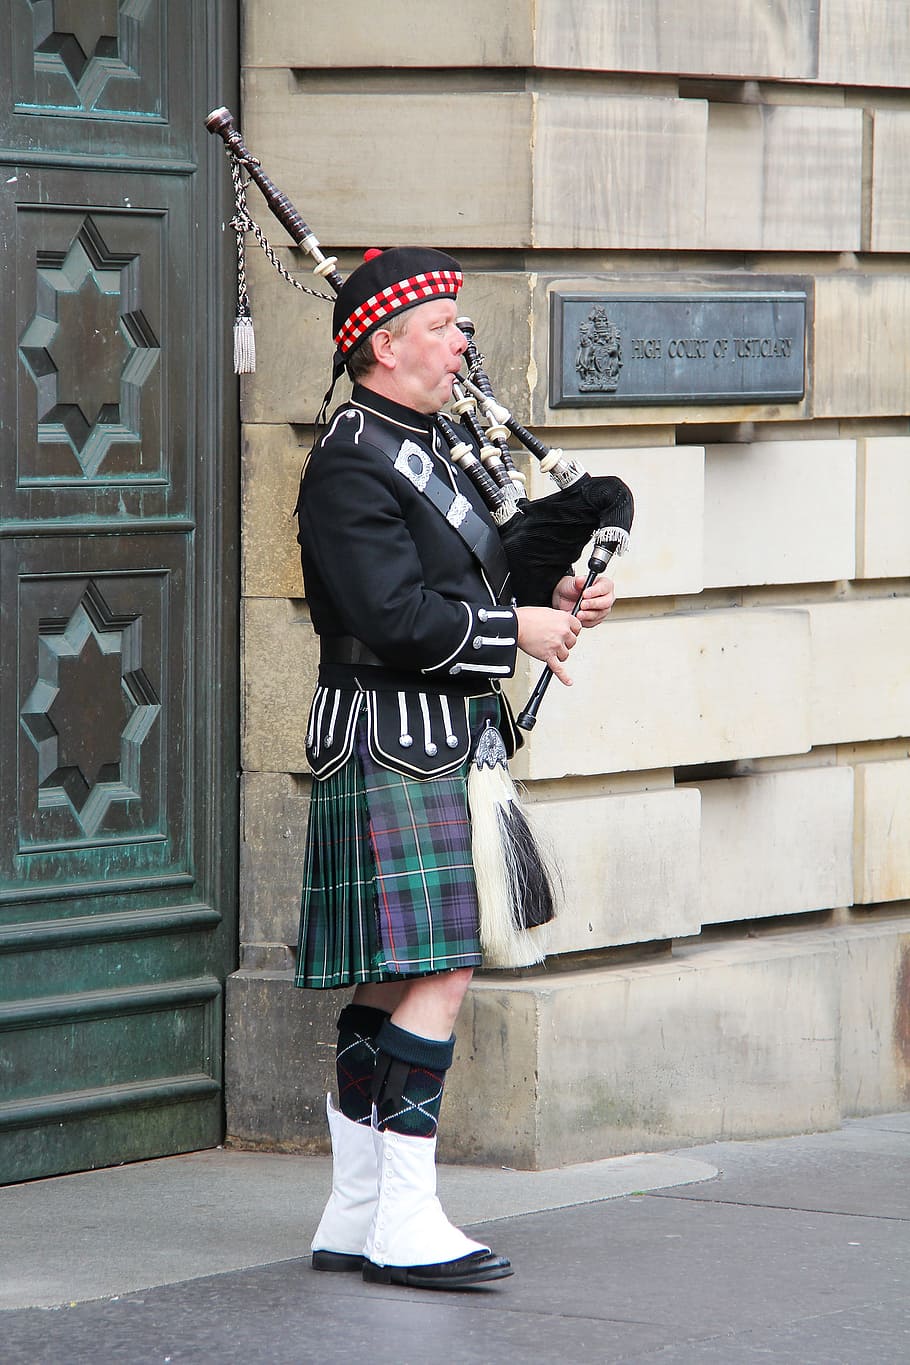 bagpipes, highlander, man, person, musical instrument, scotland, edinburgh, uk, music, tones